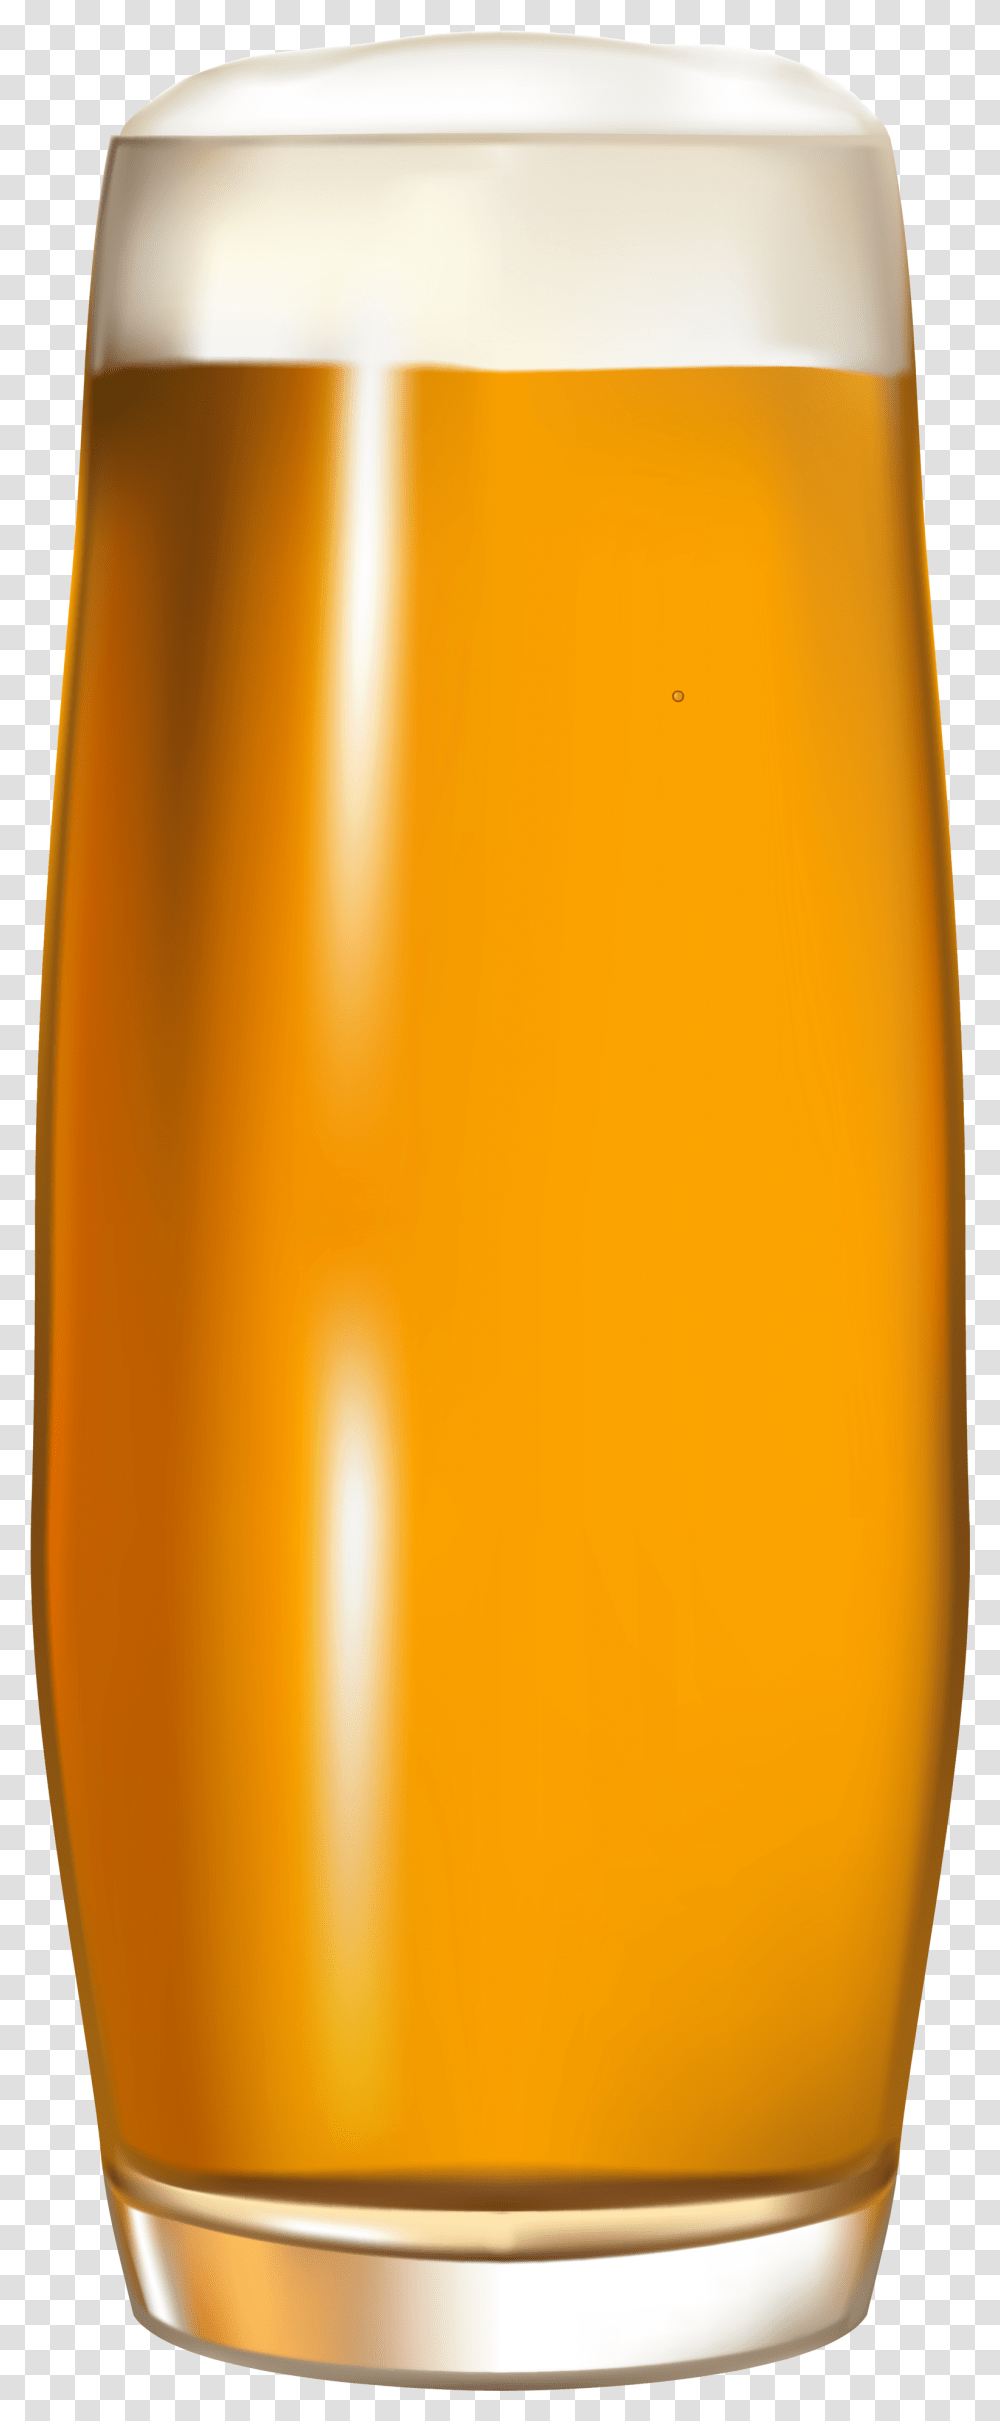 Beer Glass Clipart Wheat Beer, Orange Juice, Beverage, Drink, Alcohol Transparent Png